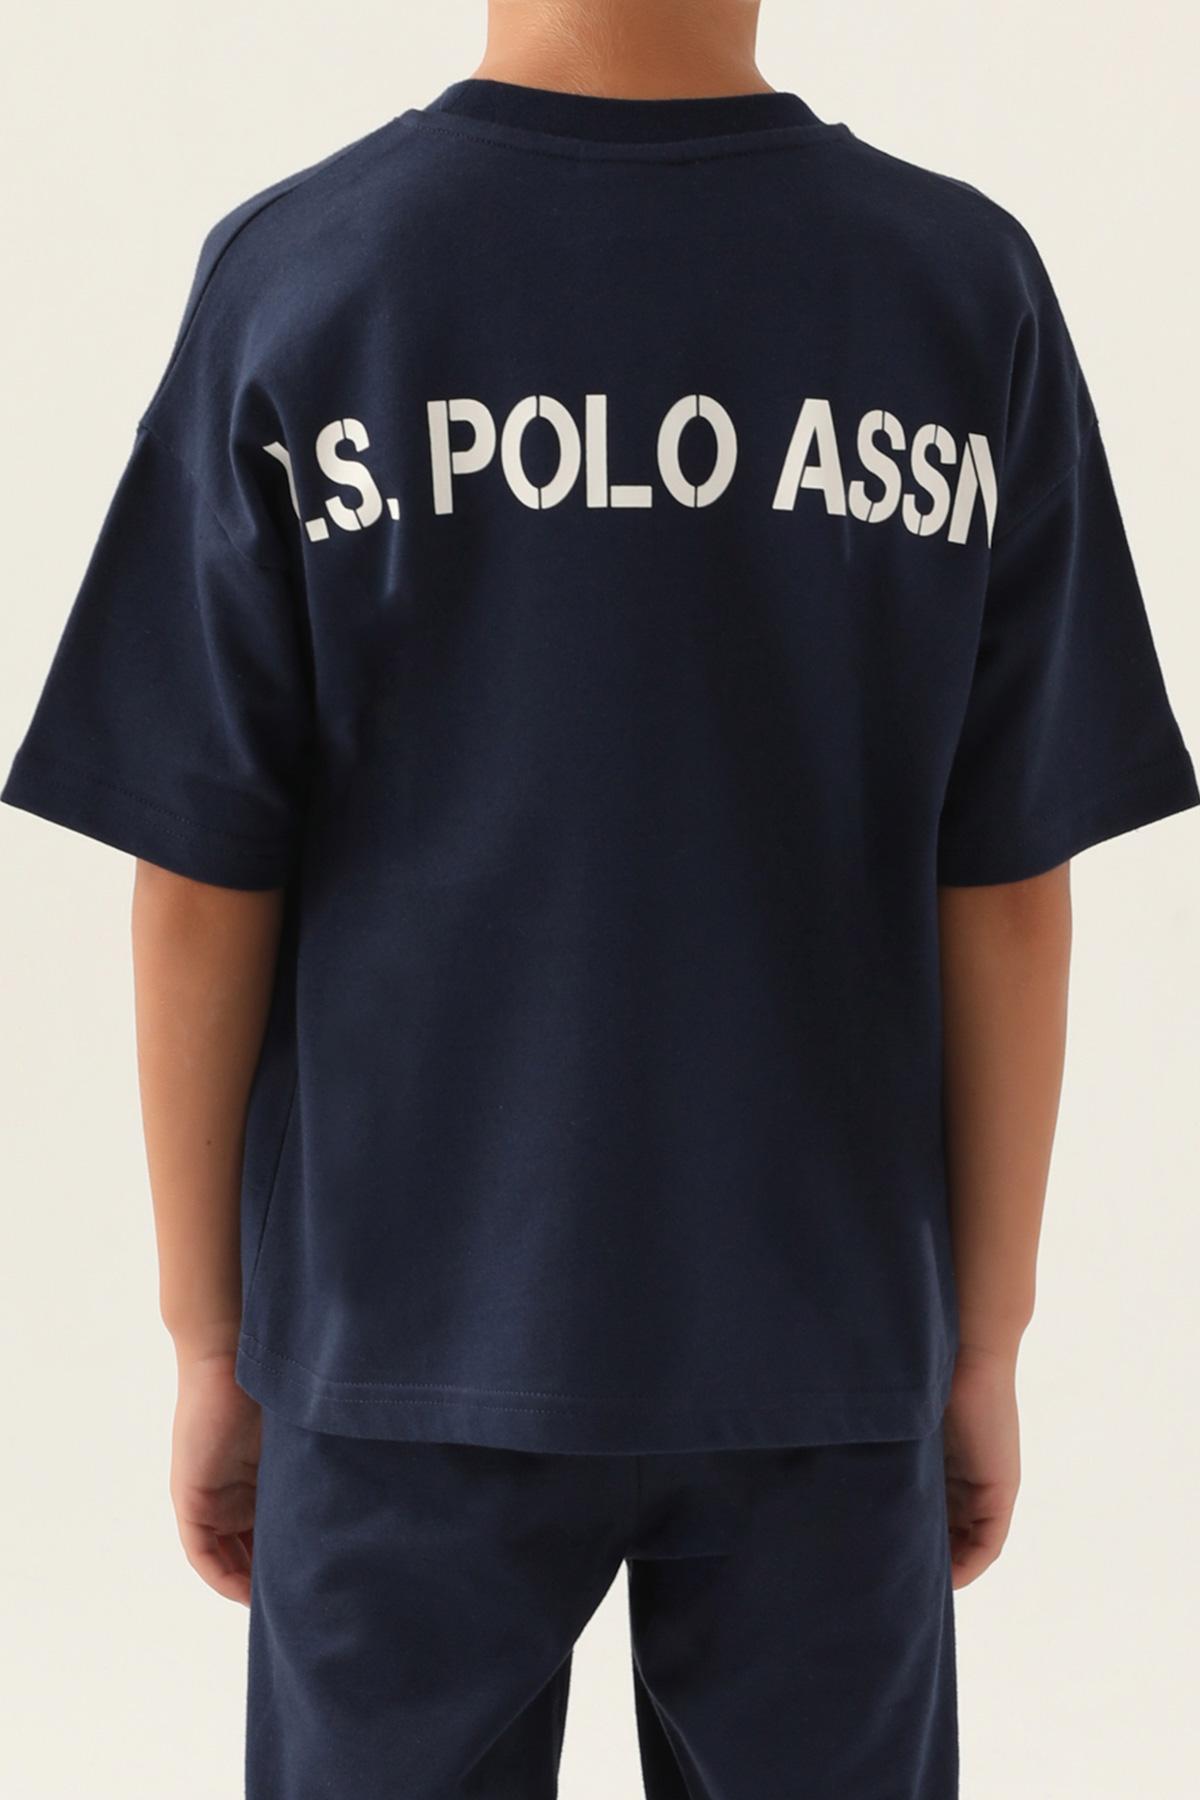 Selected image for U.S. Polo Assn. Komplet za dečake US1774-G, Teget